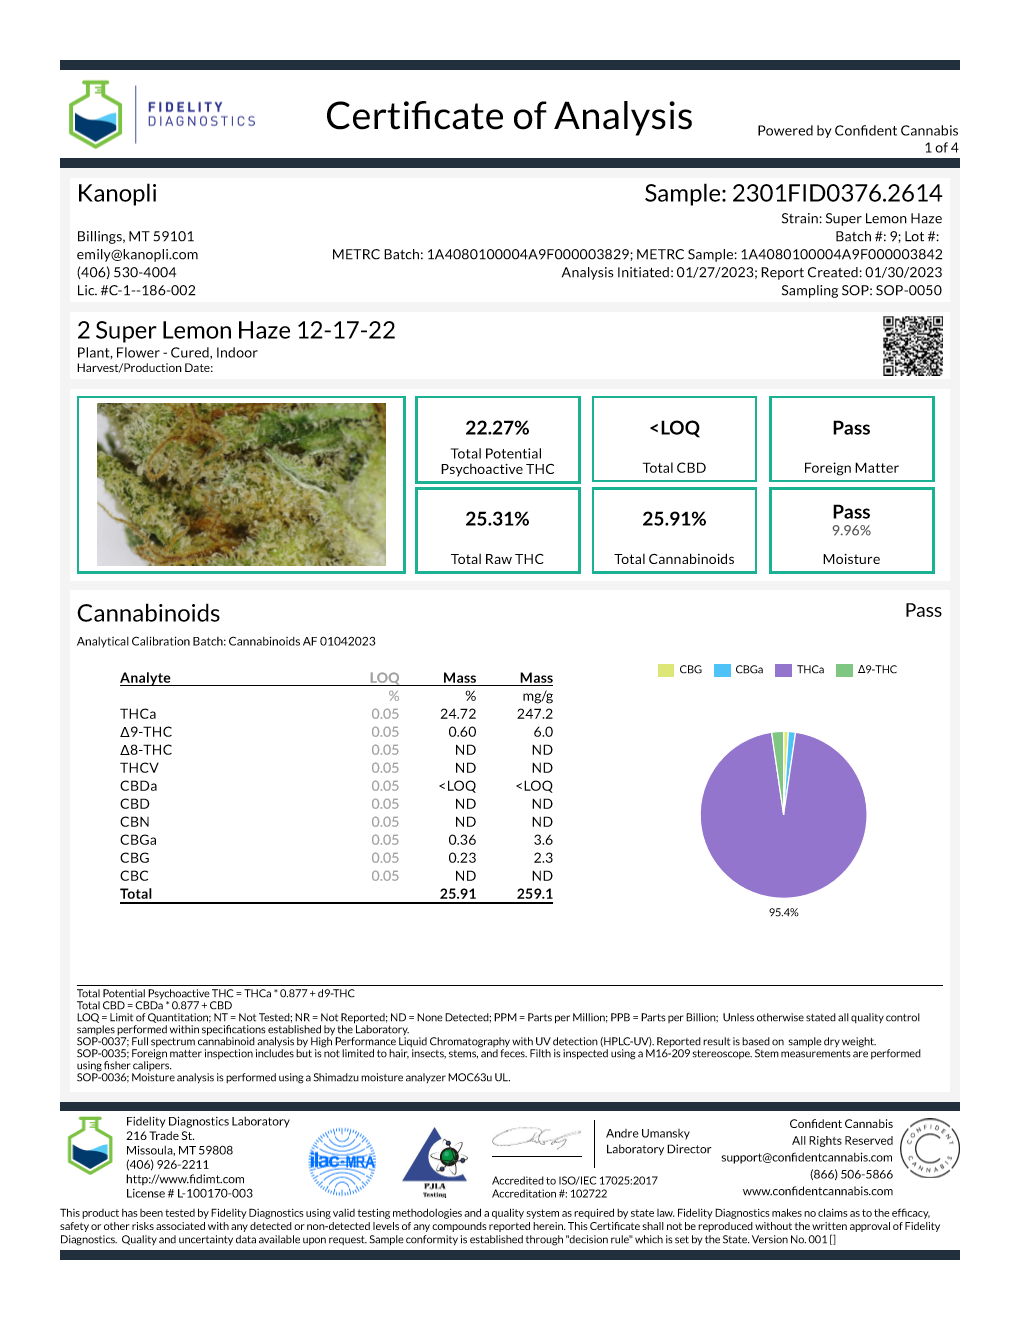 Adult Use - Super Lemon Haze - Sativa 22.27% (Dec. 2022)